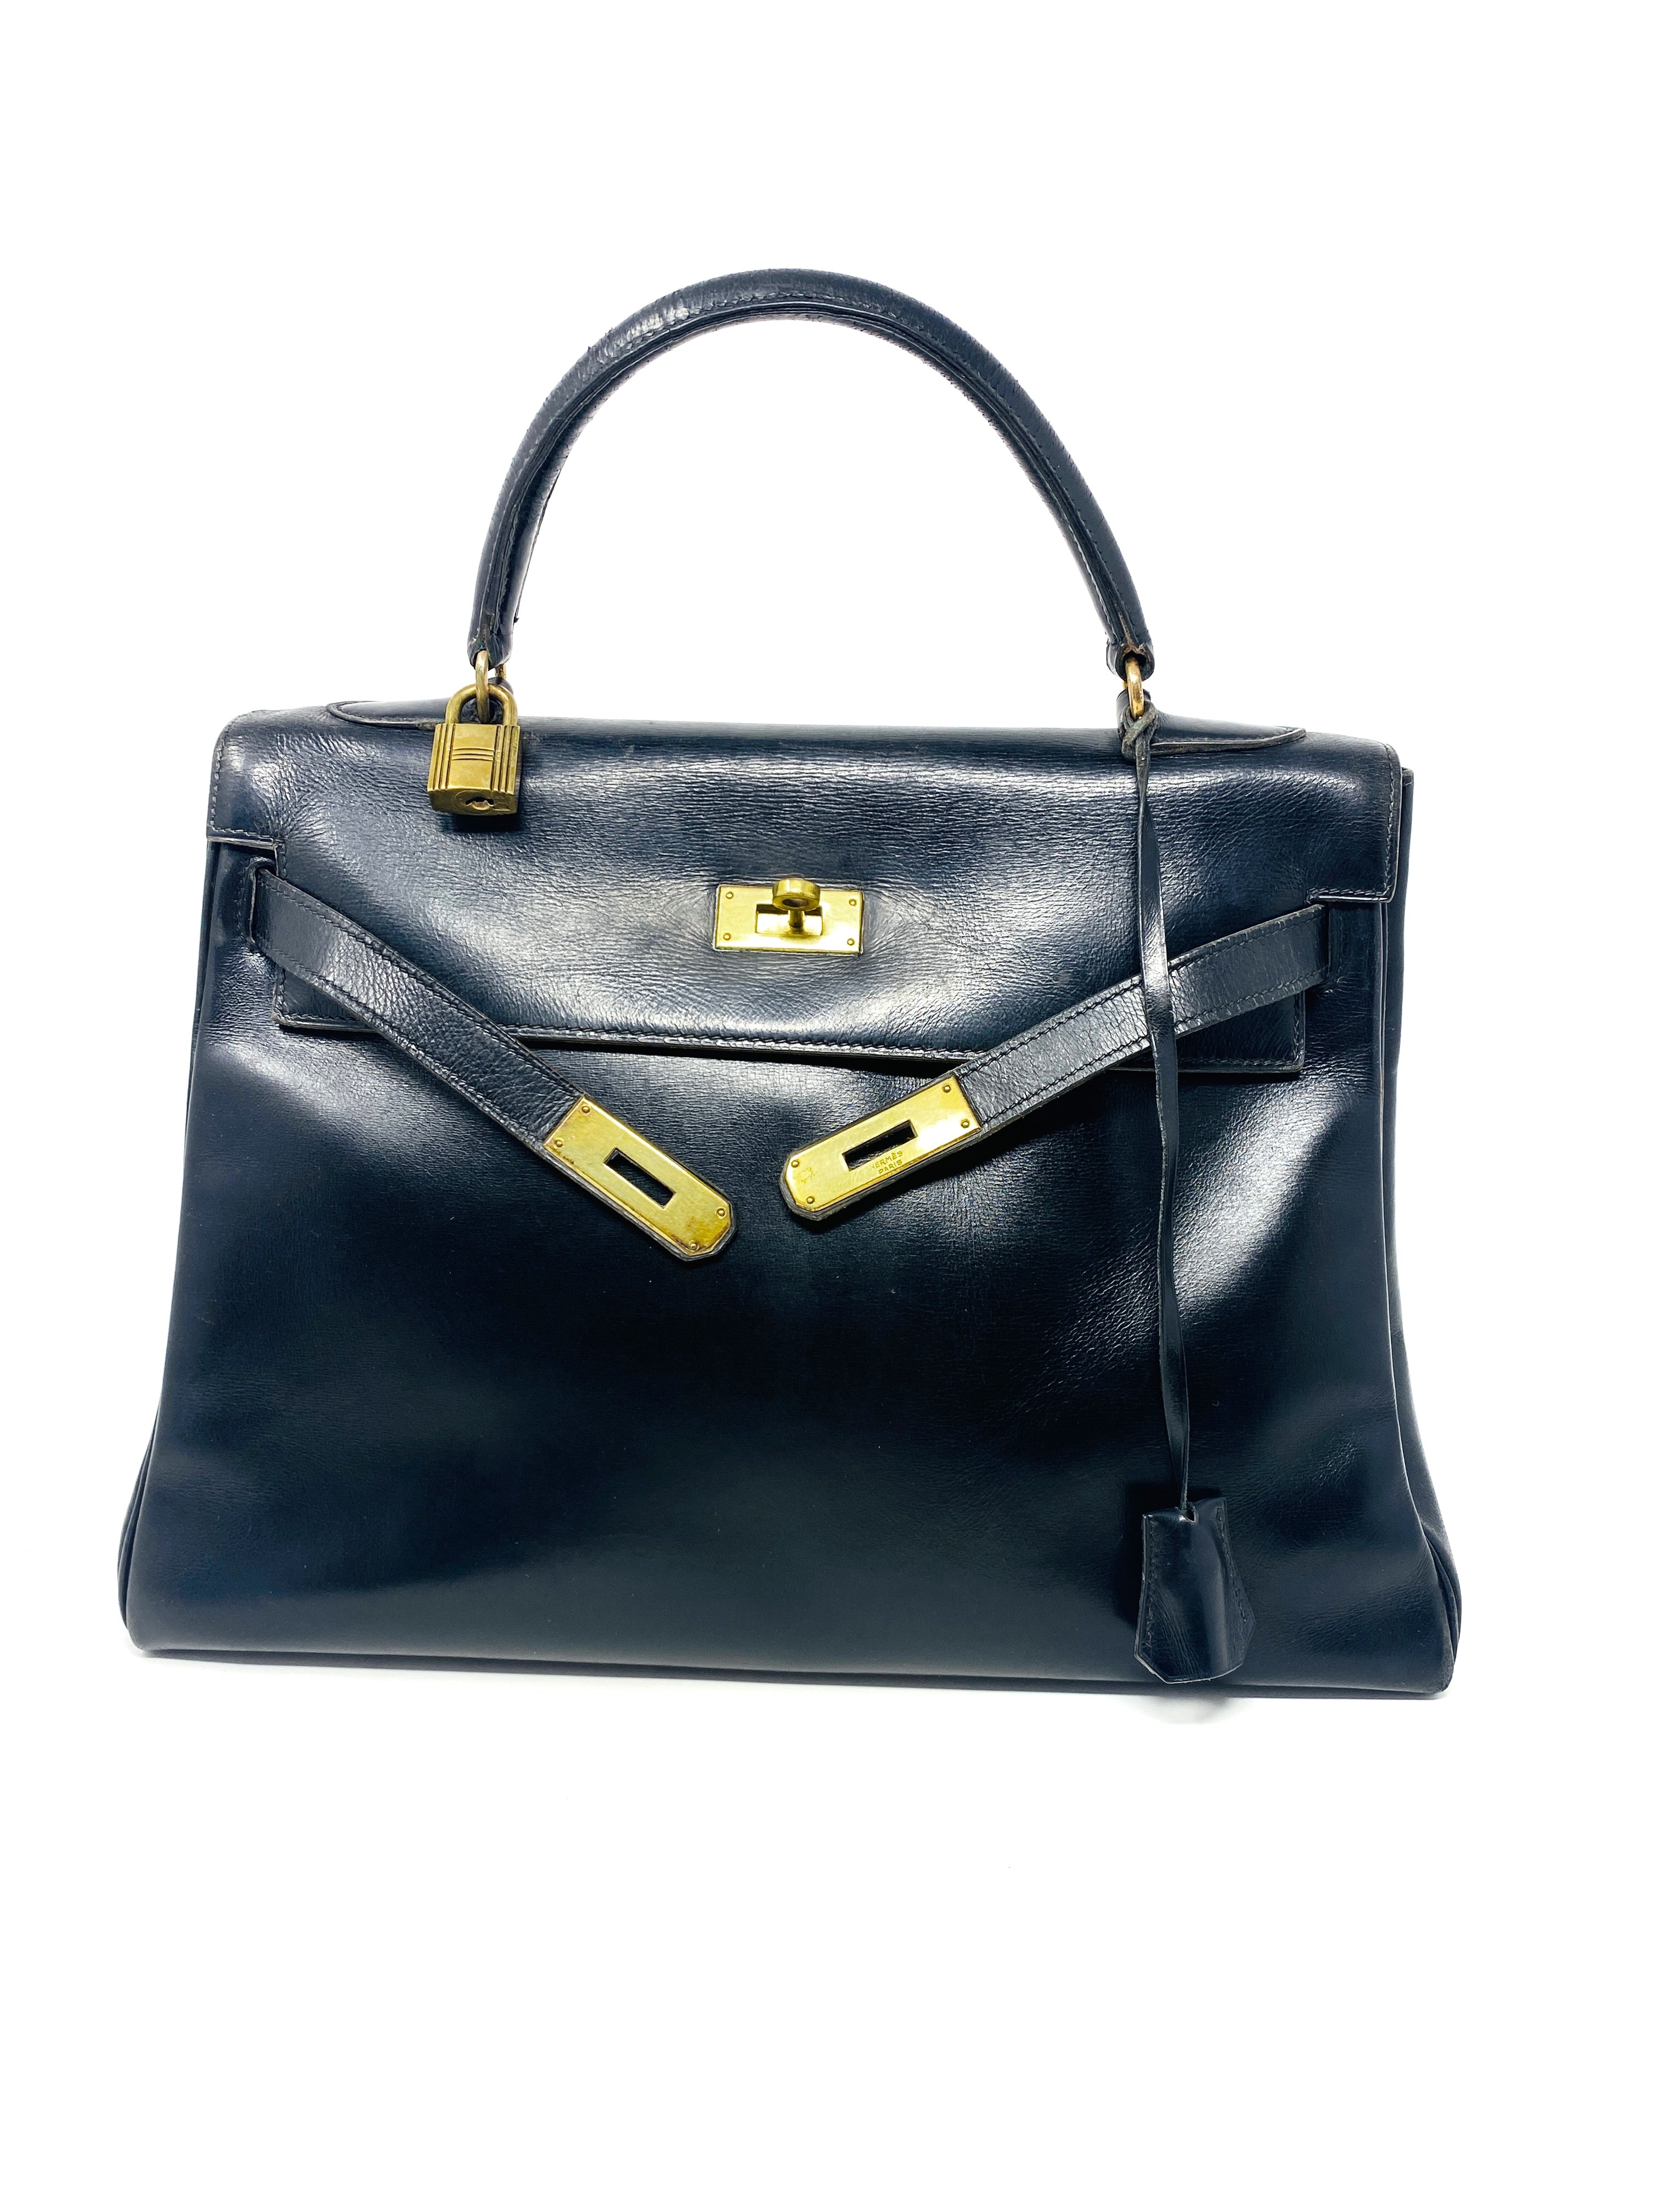 Hermes Kelly Bag 32 vintage, black box leather